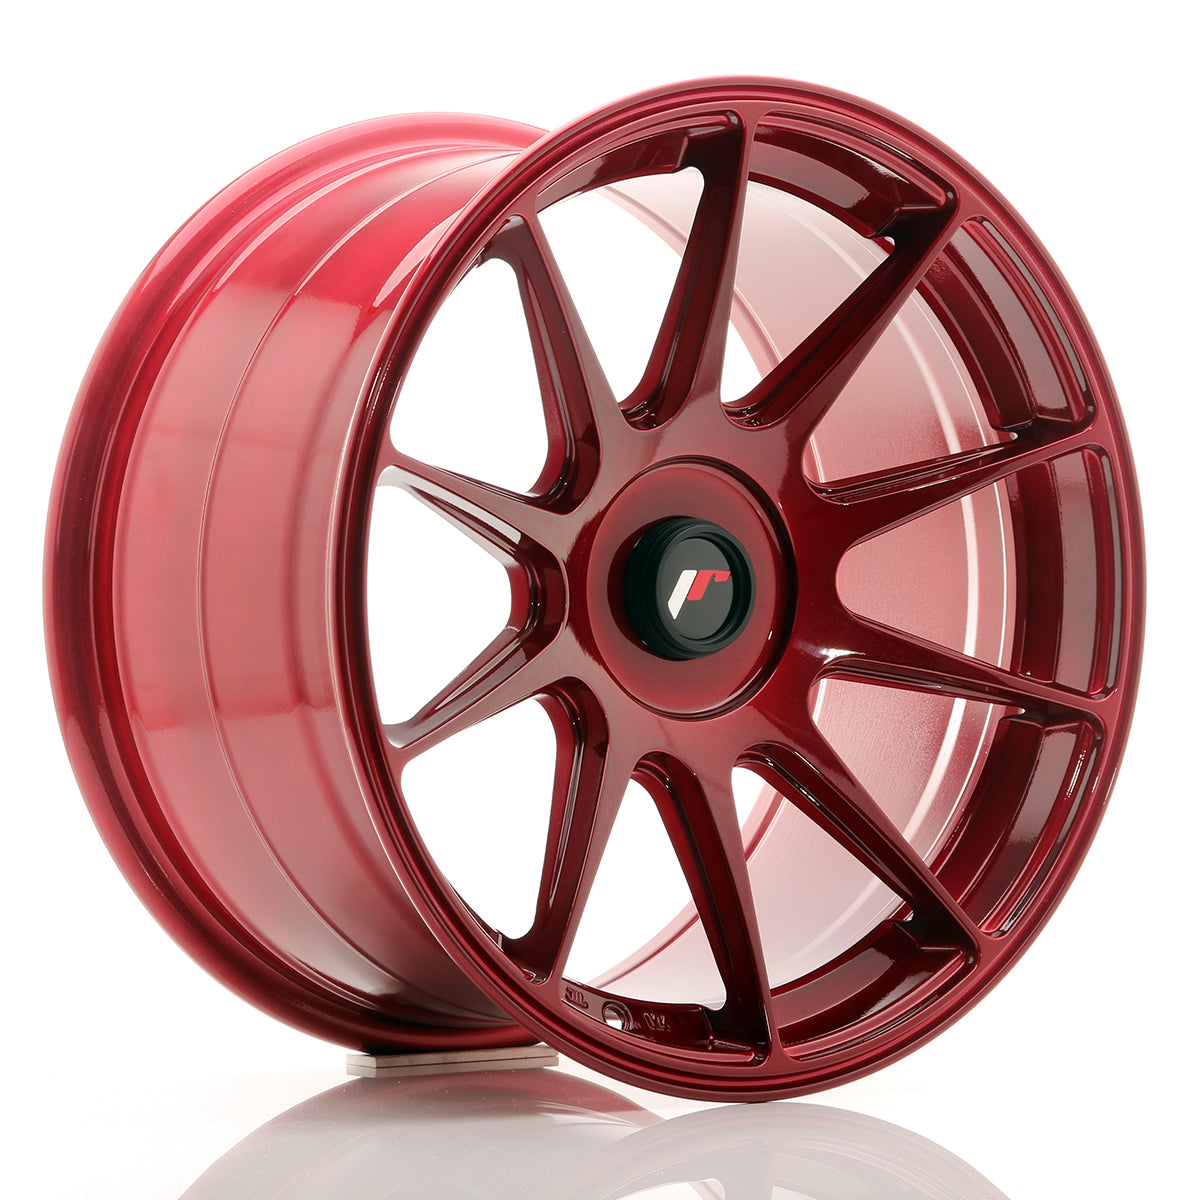 JR Wheels JR11 17x9 ET25-35 BLANK Platinum Red